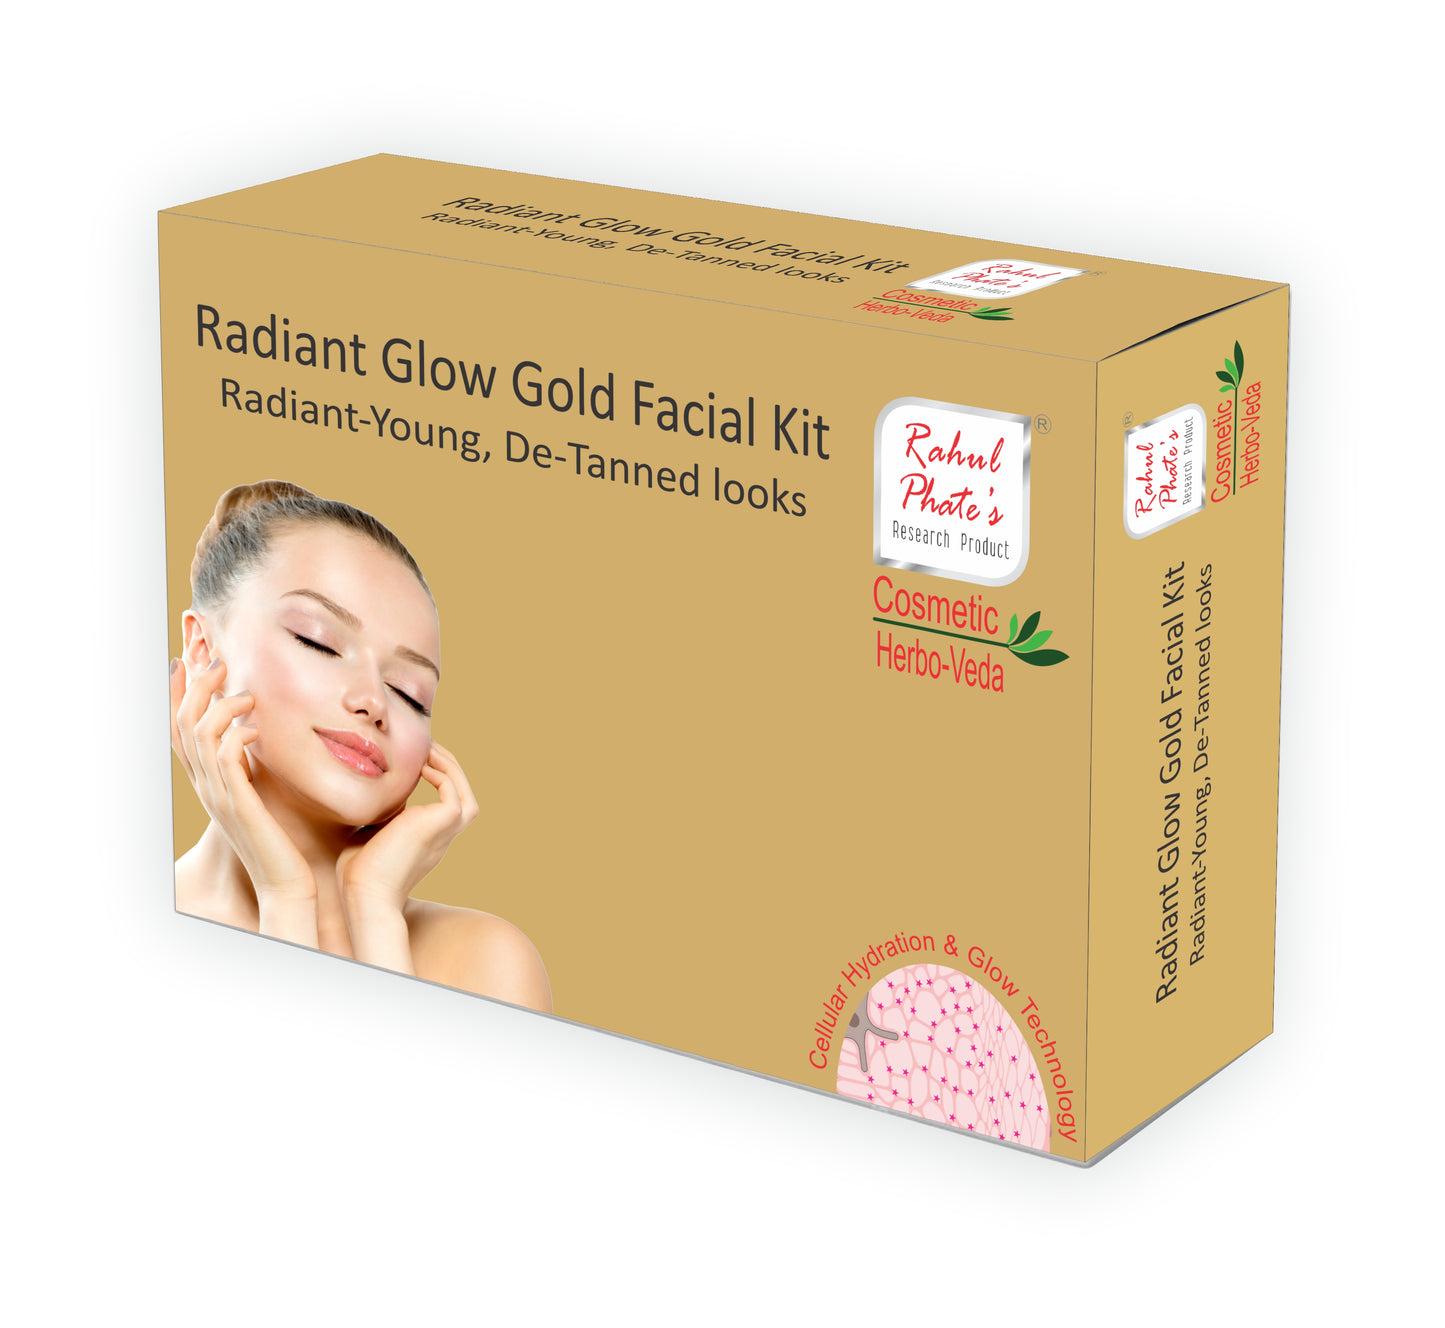 Radiant Glow Gold Facial Kit